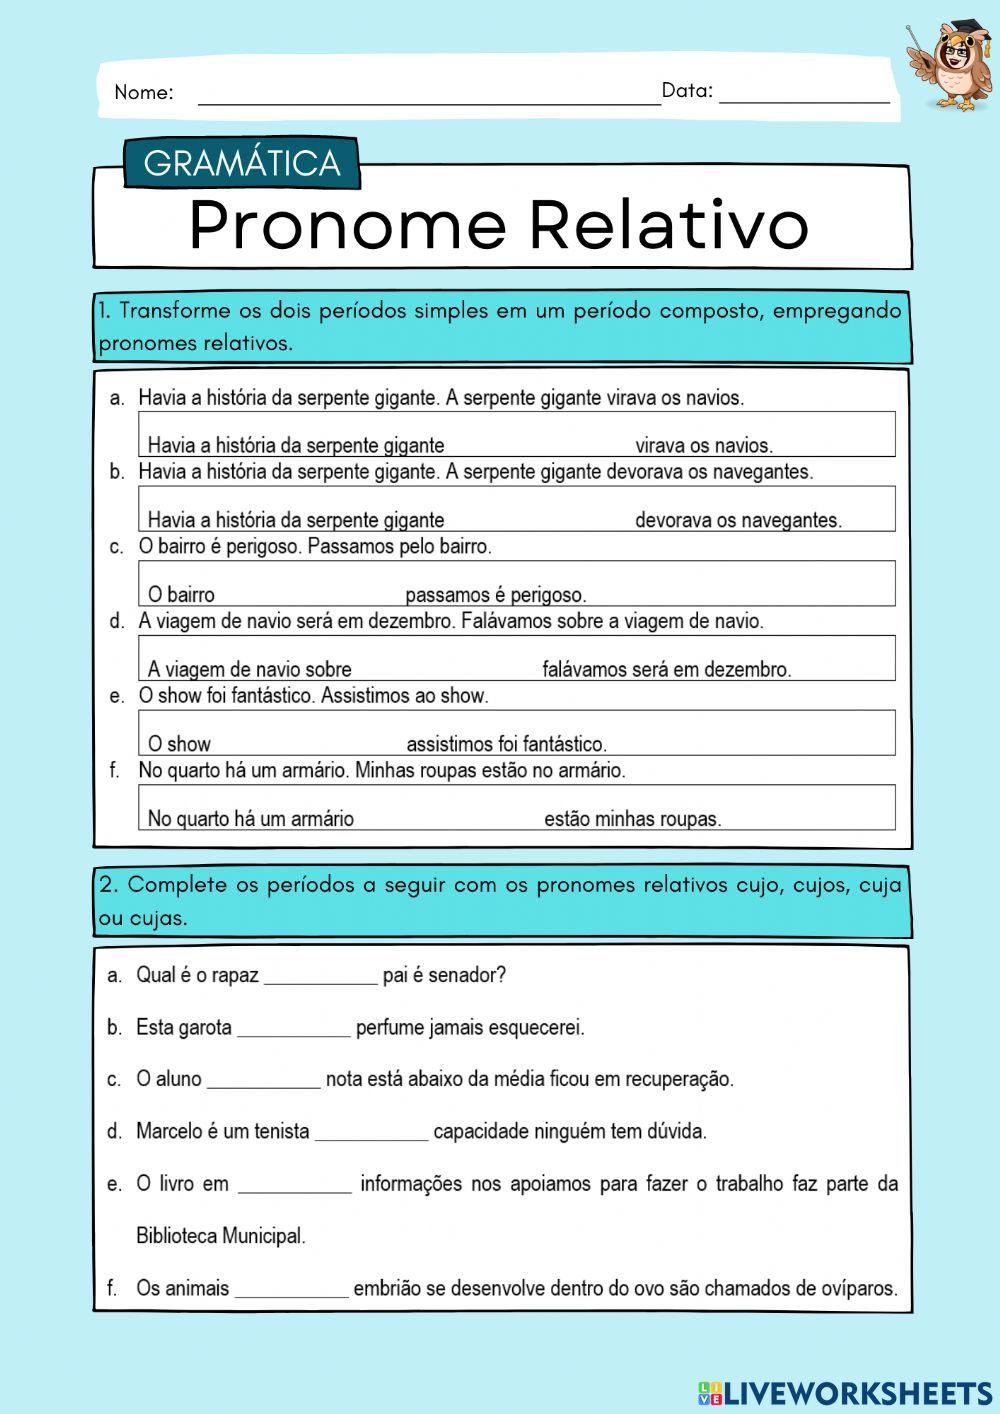 Pronome Relativo exercise